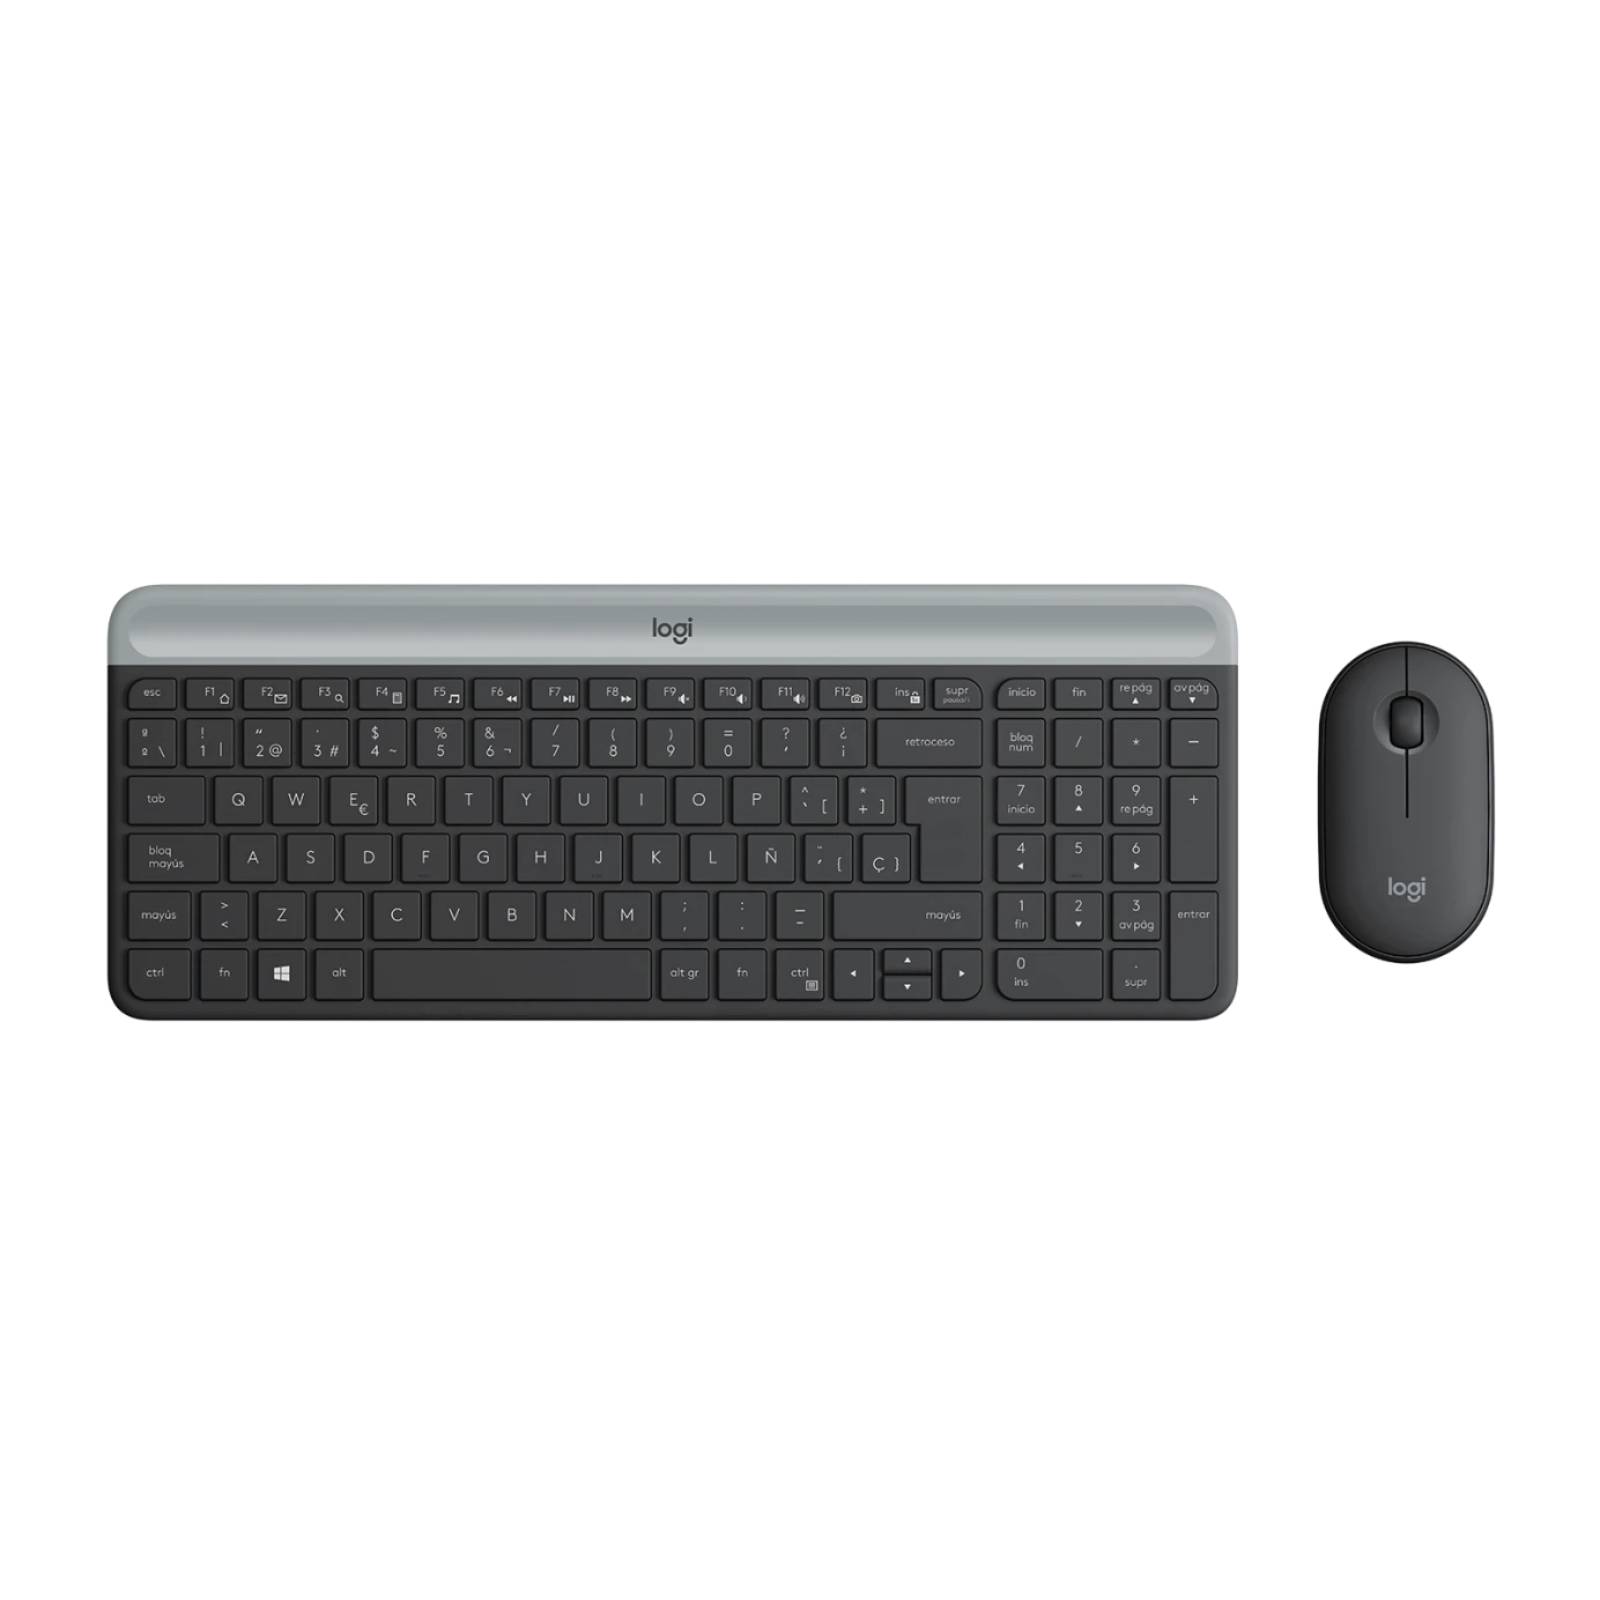 Logitech-Keypad-and-mouse-set-Panama.jpg